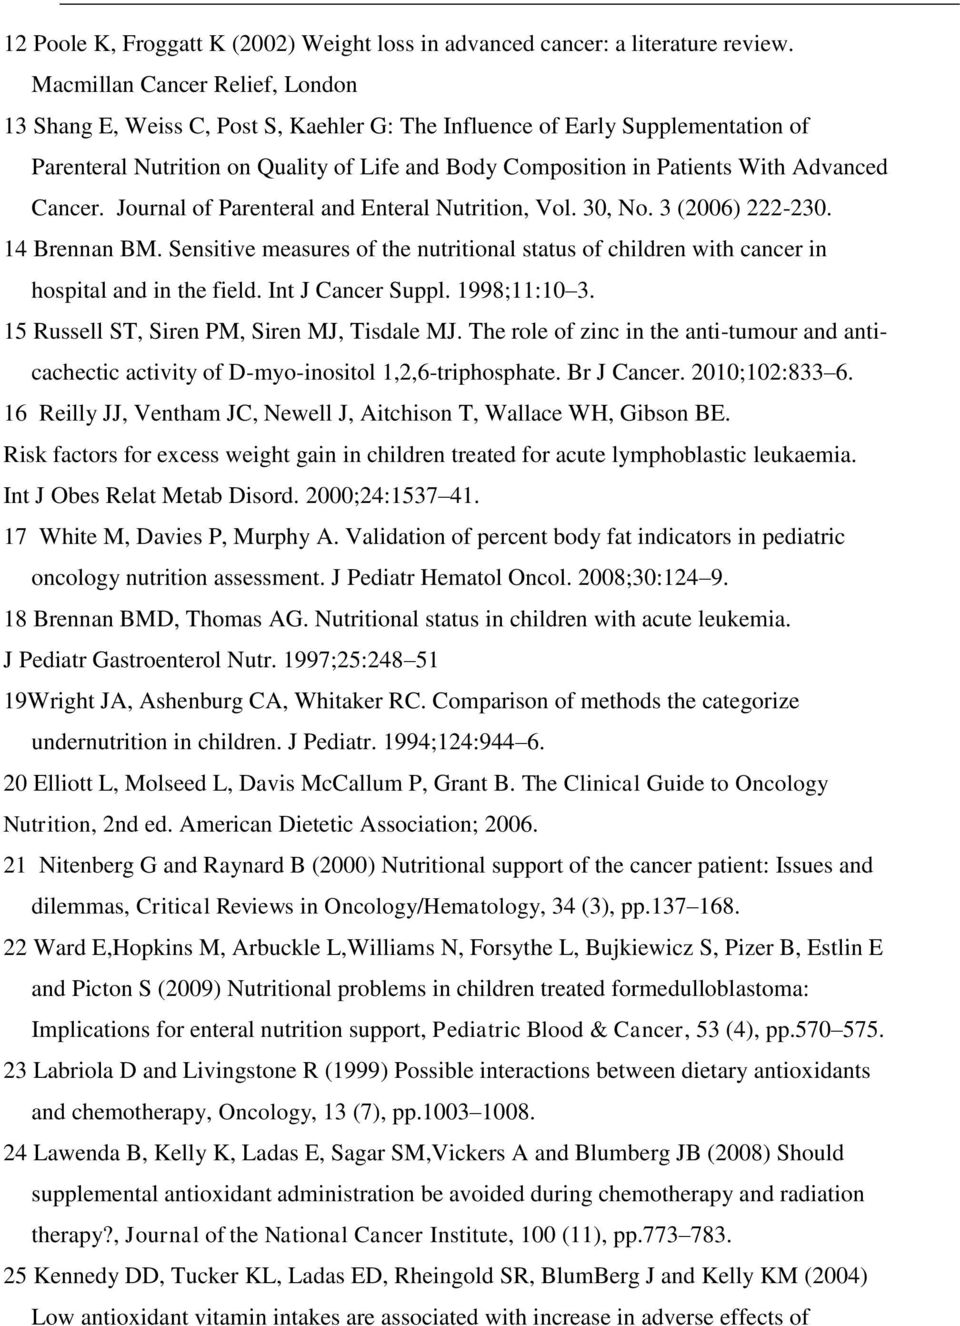 Advanced Cancer. Journal of Parenteral and Enteral Nutrition, Vol. 30, No. 3 (2006) 222-230. 14 Brennan BM.